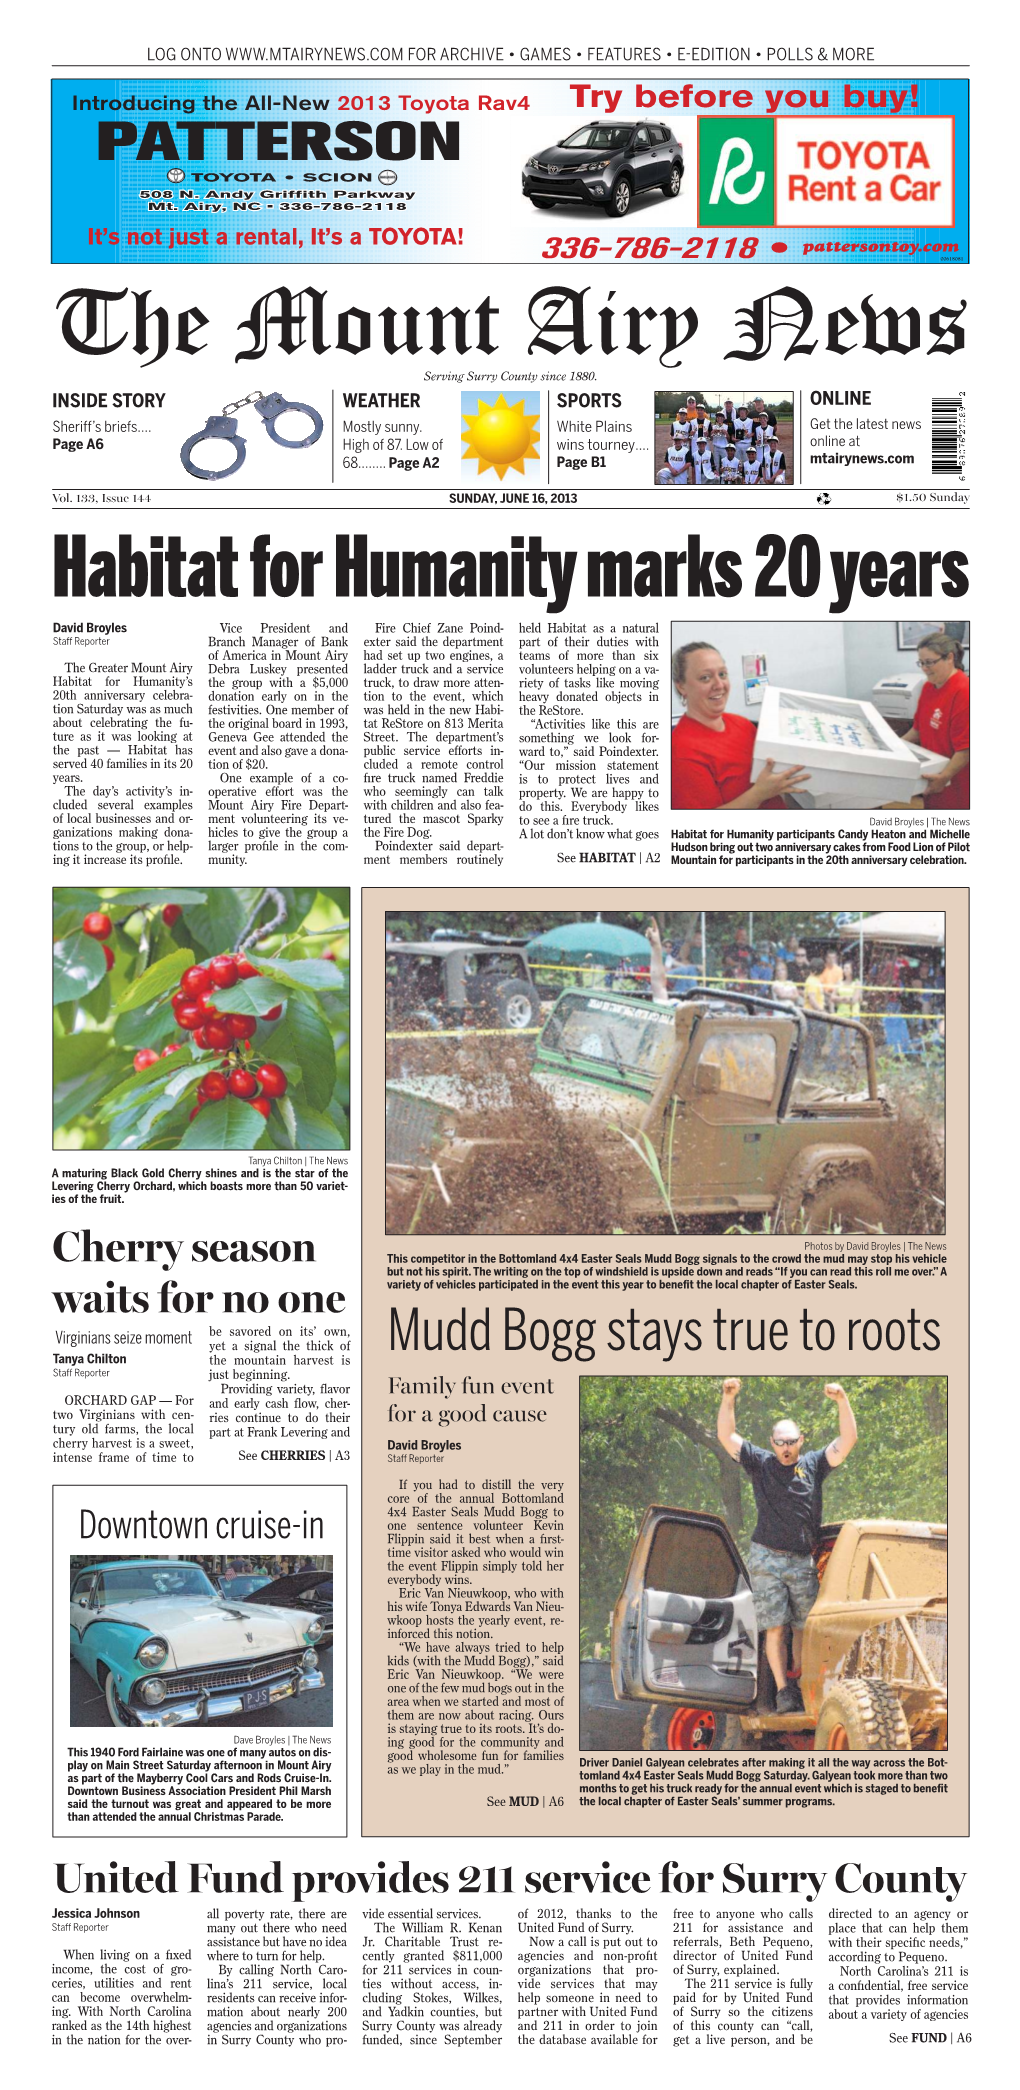 Habitat for Humanity Marks 20 Years